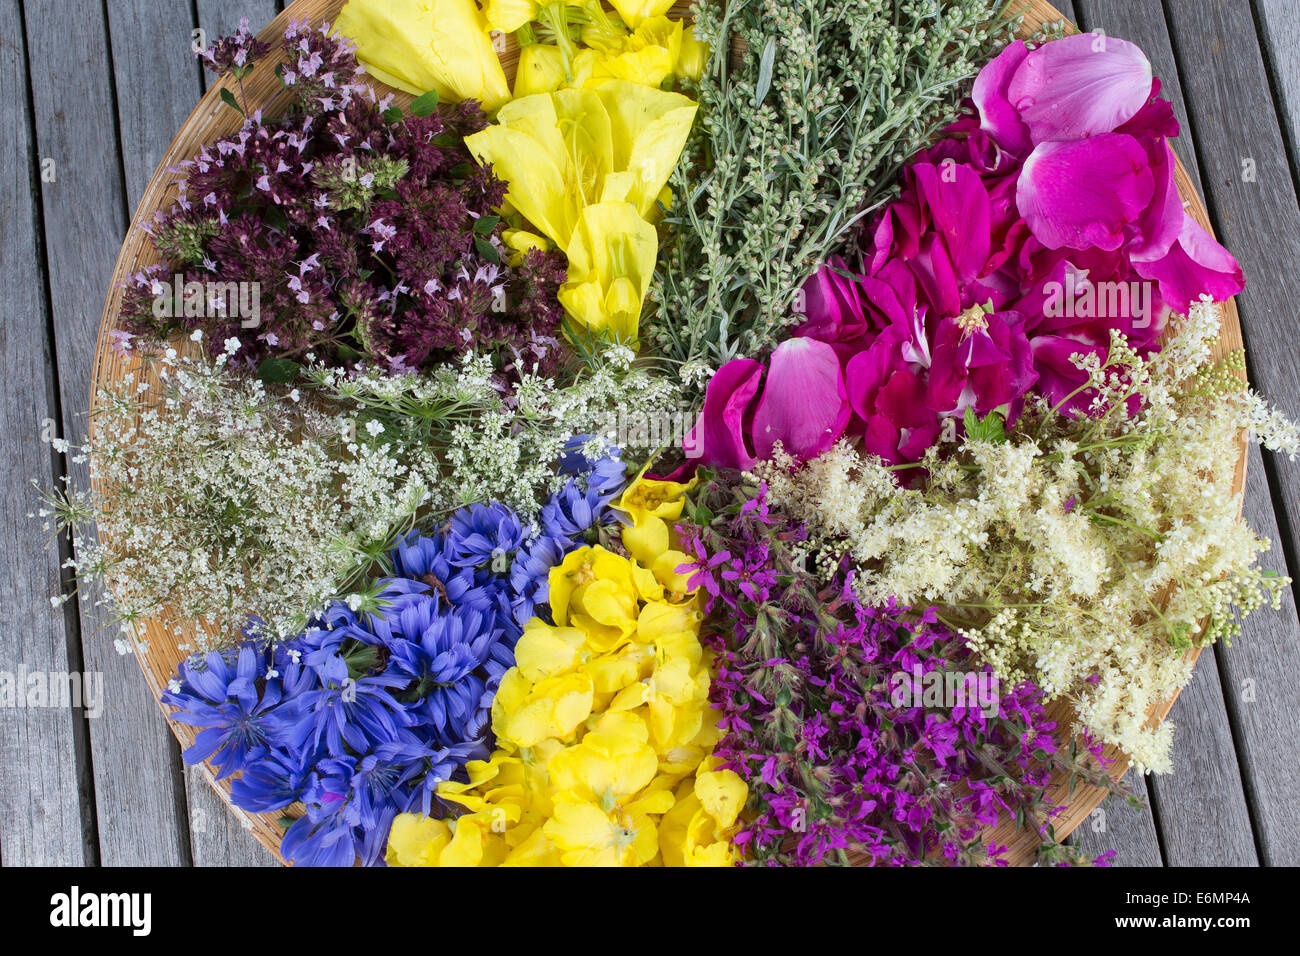 Blütenteller, Blüten, Blumen, Kräuter, Kräuter sammeln, Kräuterernte, Blütenblätter auf einem Teller sortiert zum Trocknen, essb ed Foto Stock